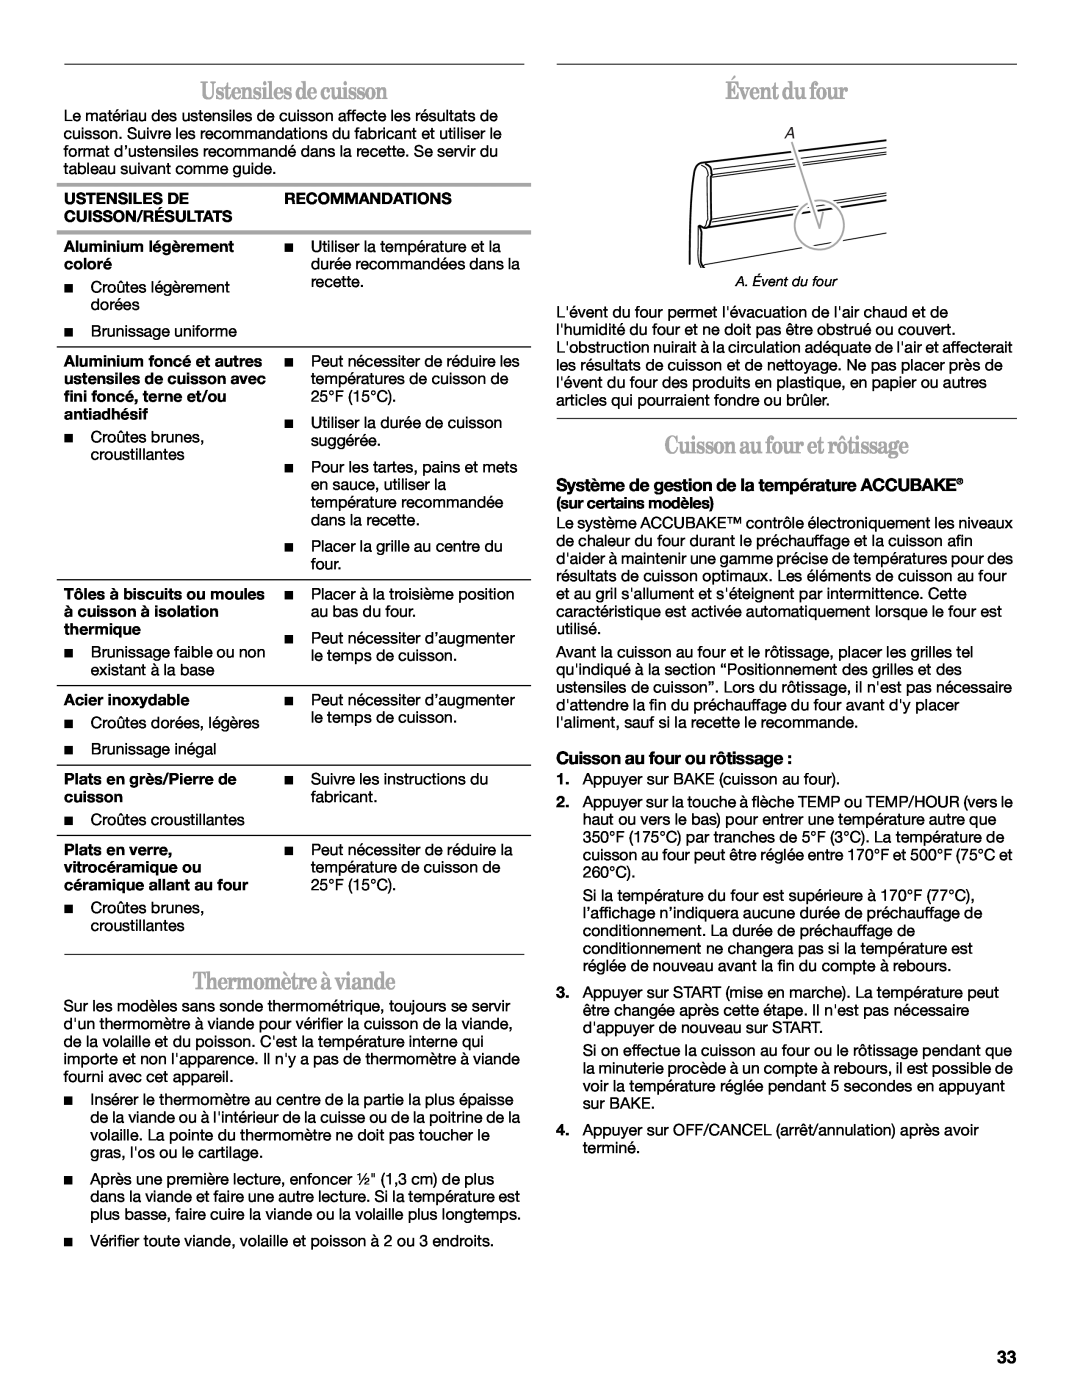 Whirlpool W10162212A manual Thermomètreà viande, Éventdu four, Cuissonau fouretrôtissage, Ustensiles decuisson 